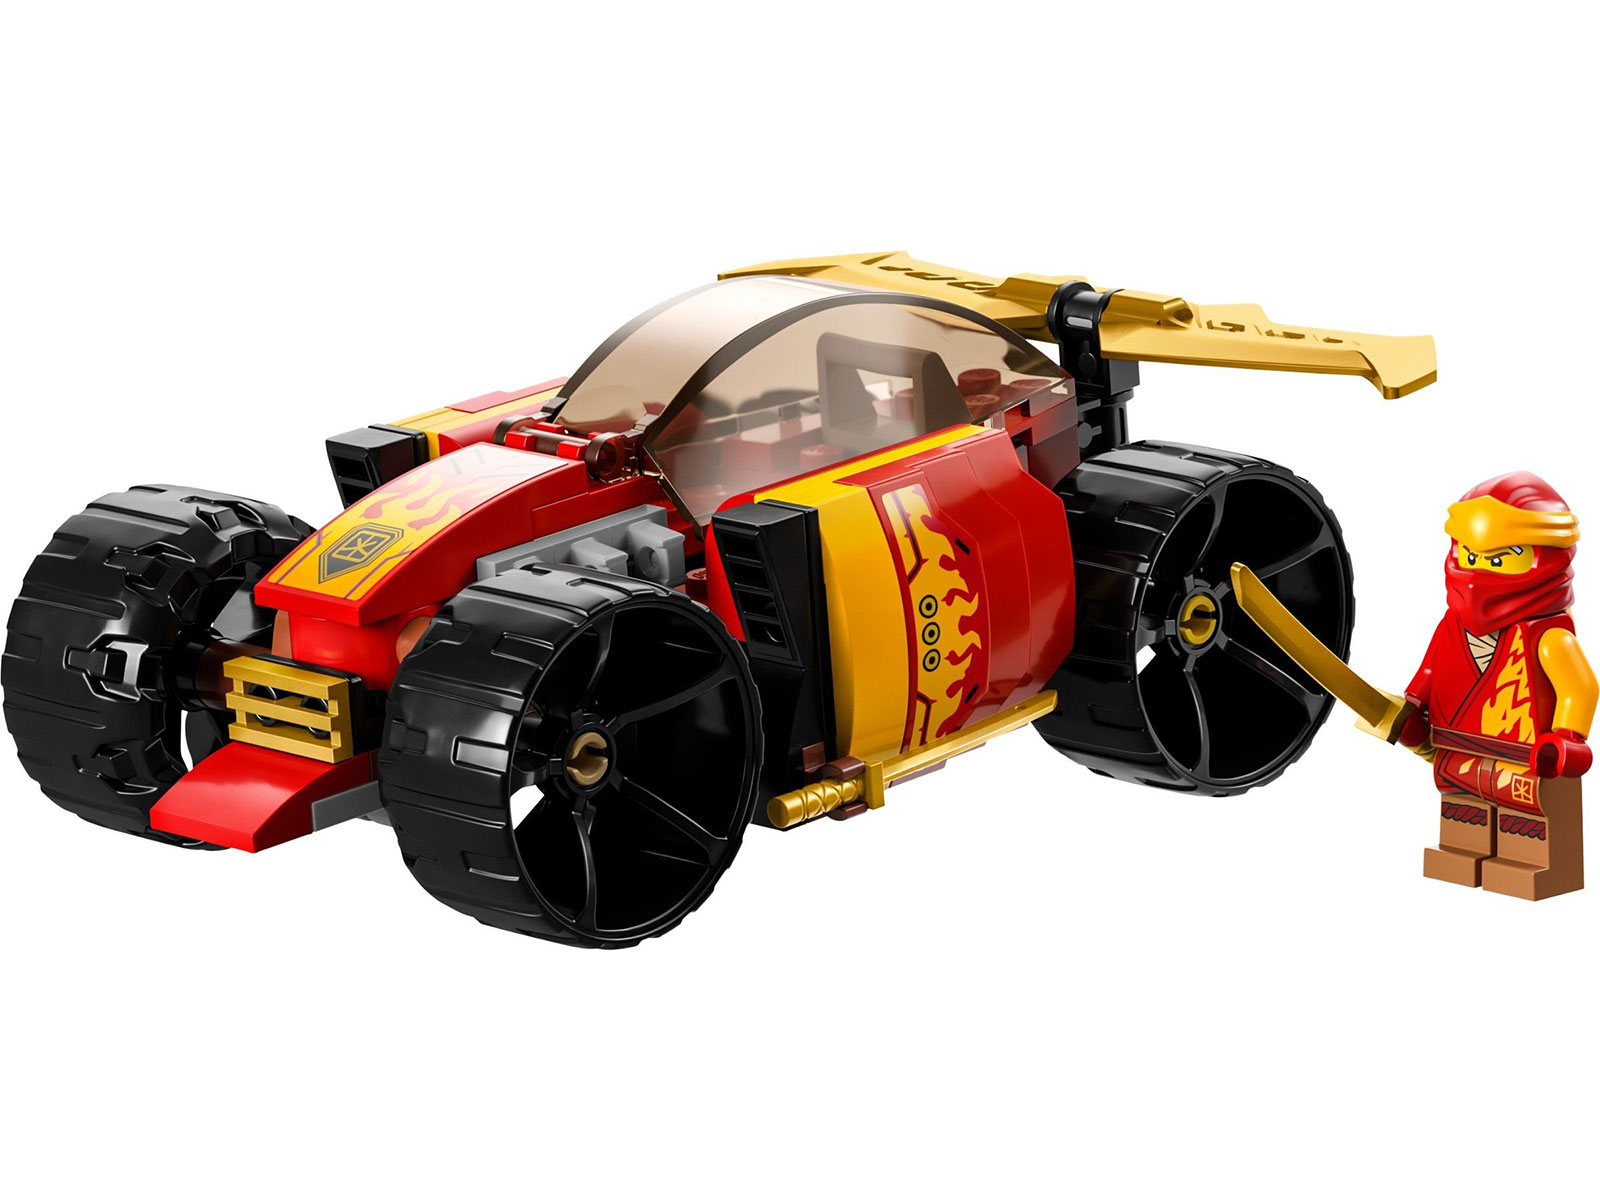 LEGO® NINJAGO® 71780 - Kais Ninja-Rennwagen EVO